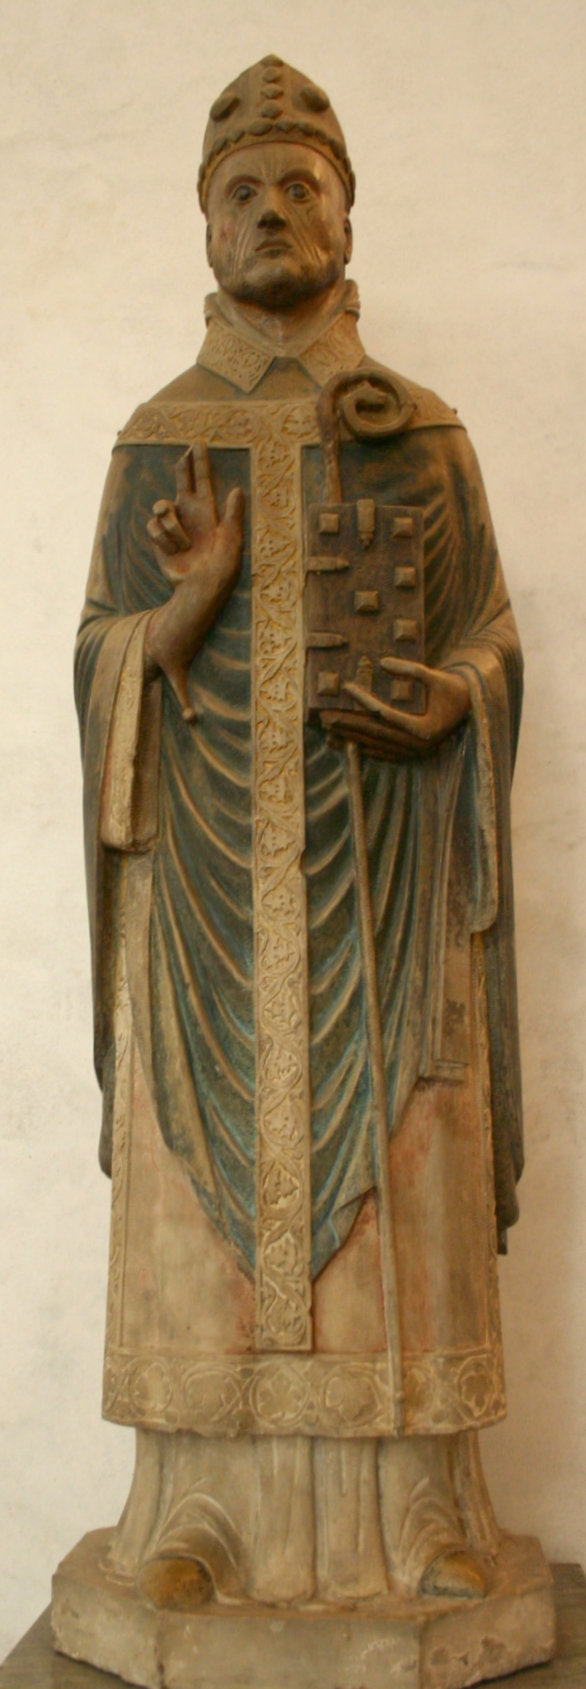 Statue im Museum der Kirche Sant'Eustorgio in Mailand